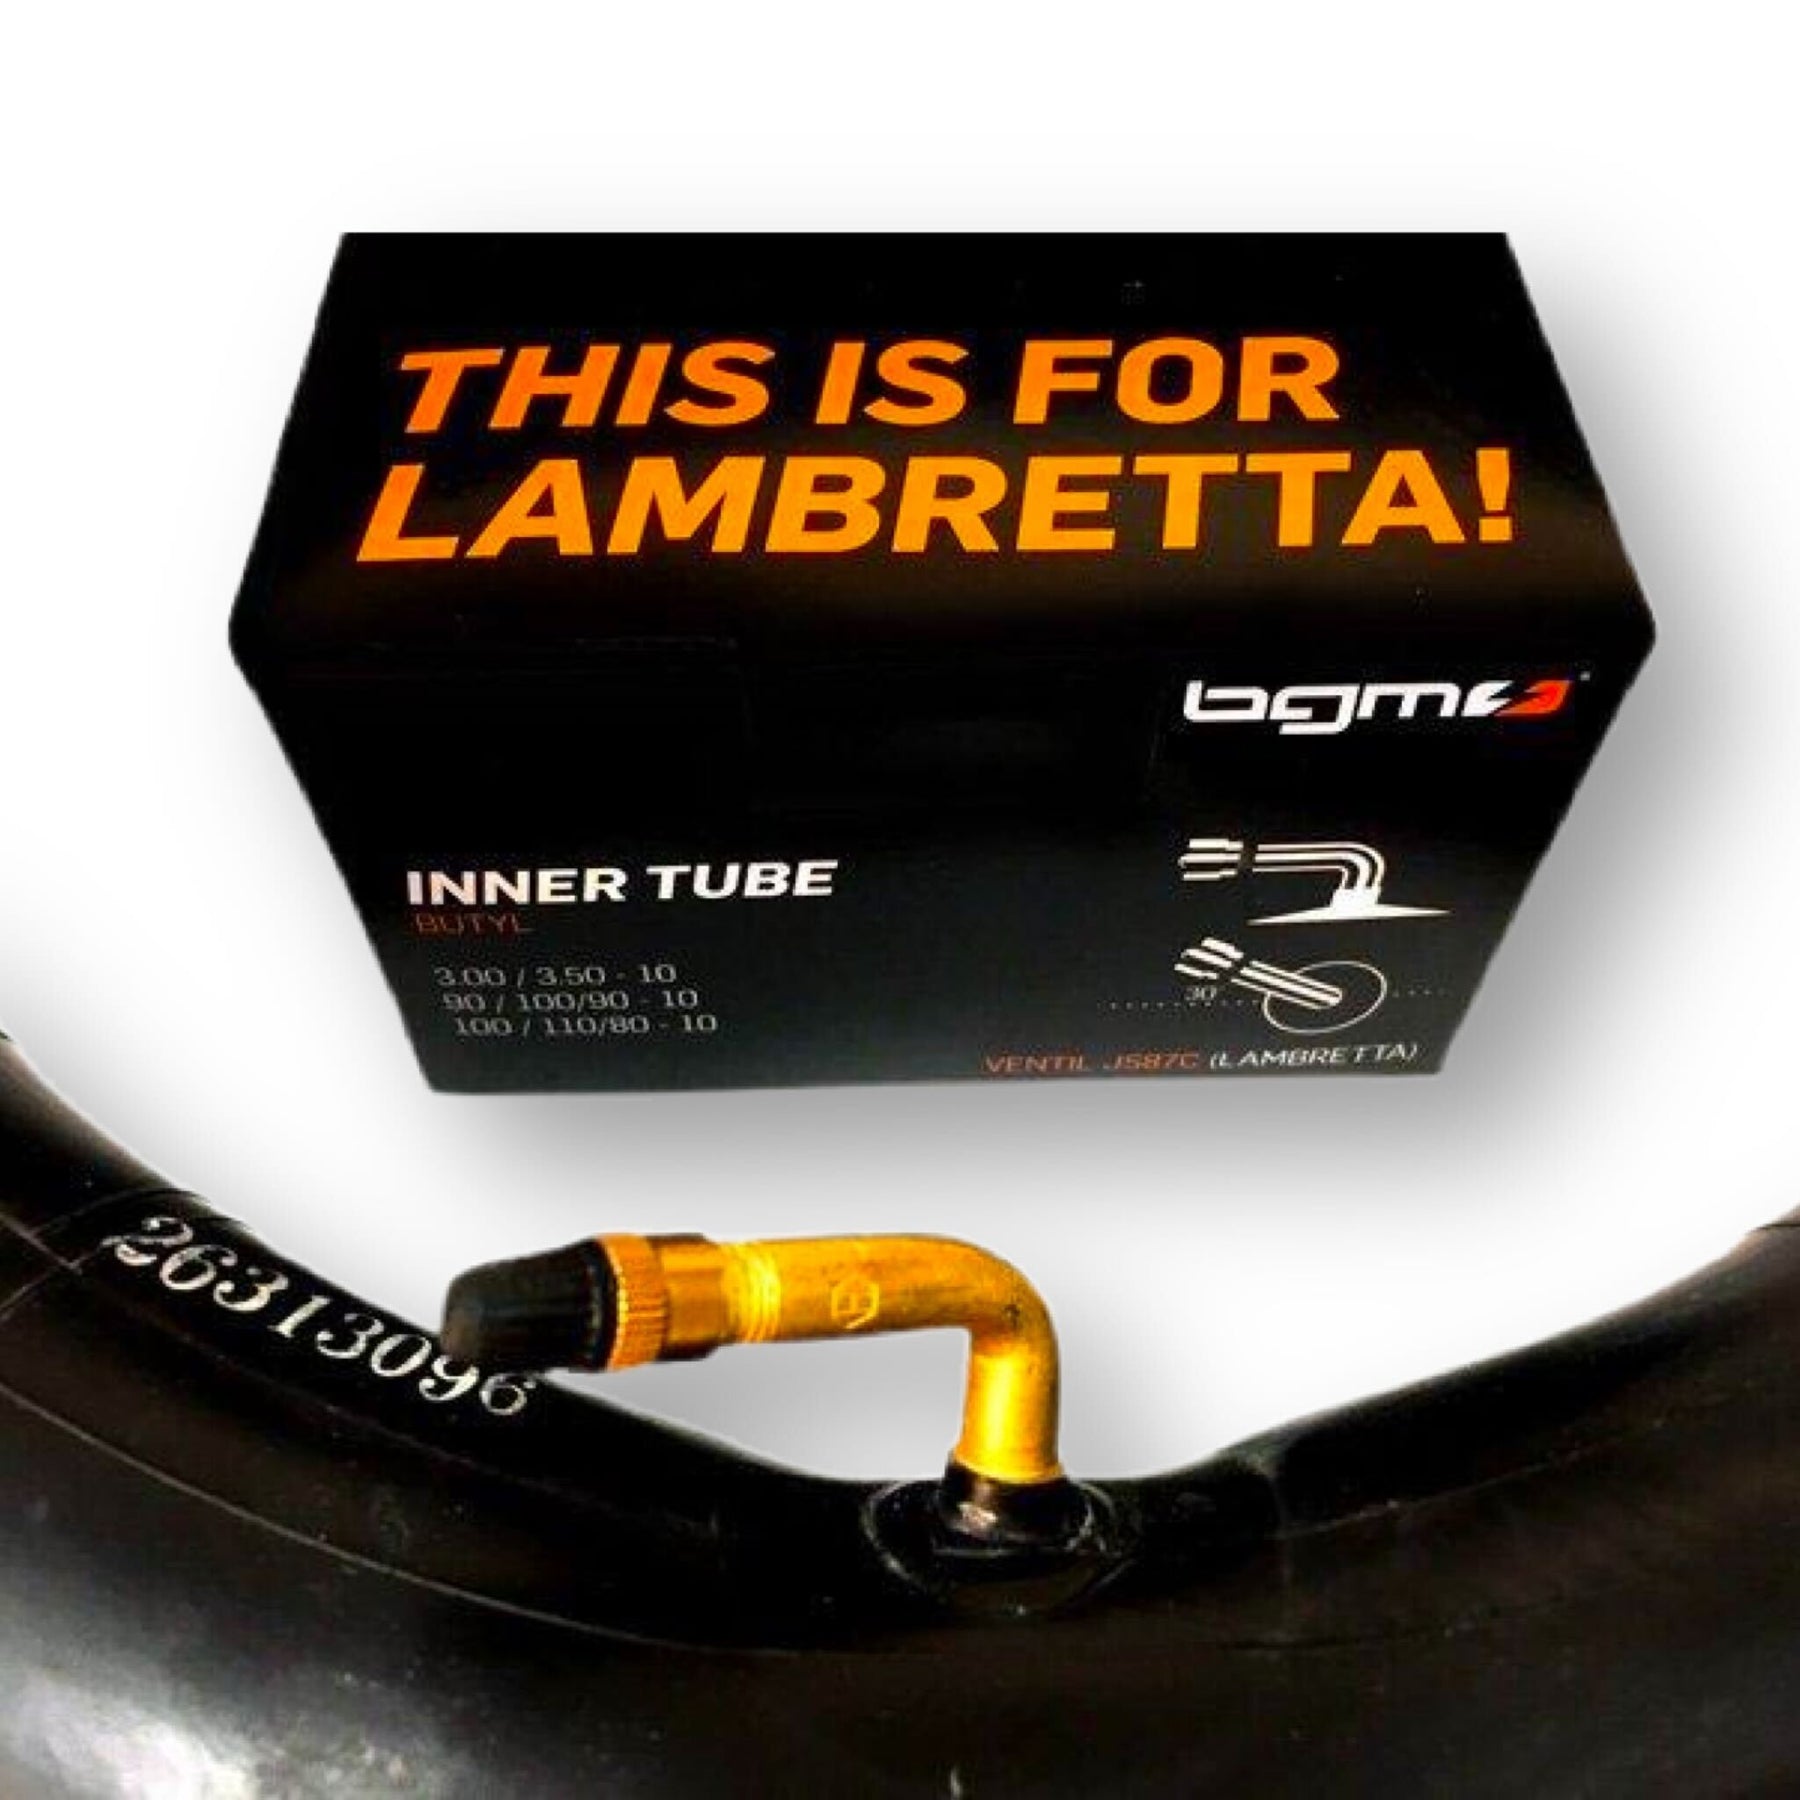 Lambretta BGM PRO 10 inch Inner Tube 45 Degree Valve- 3.50-10, 100/80-10, 100/90-10 - Bundle of 3